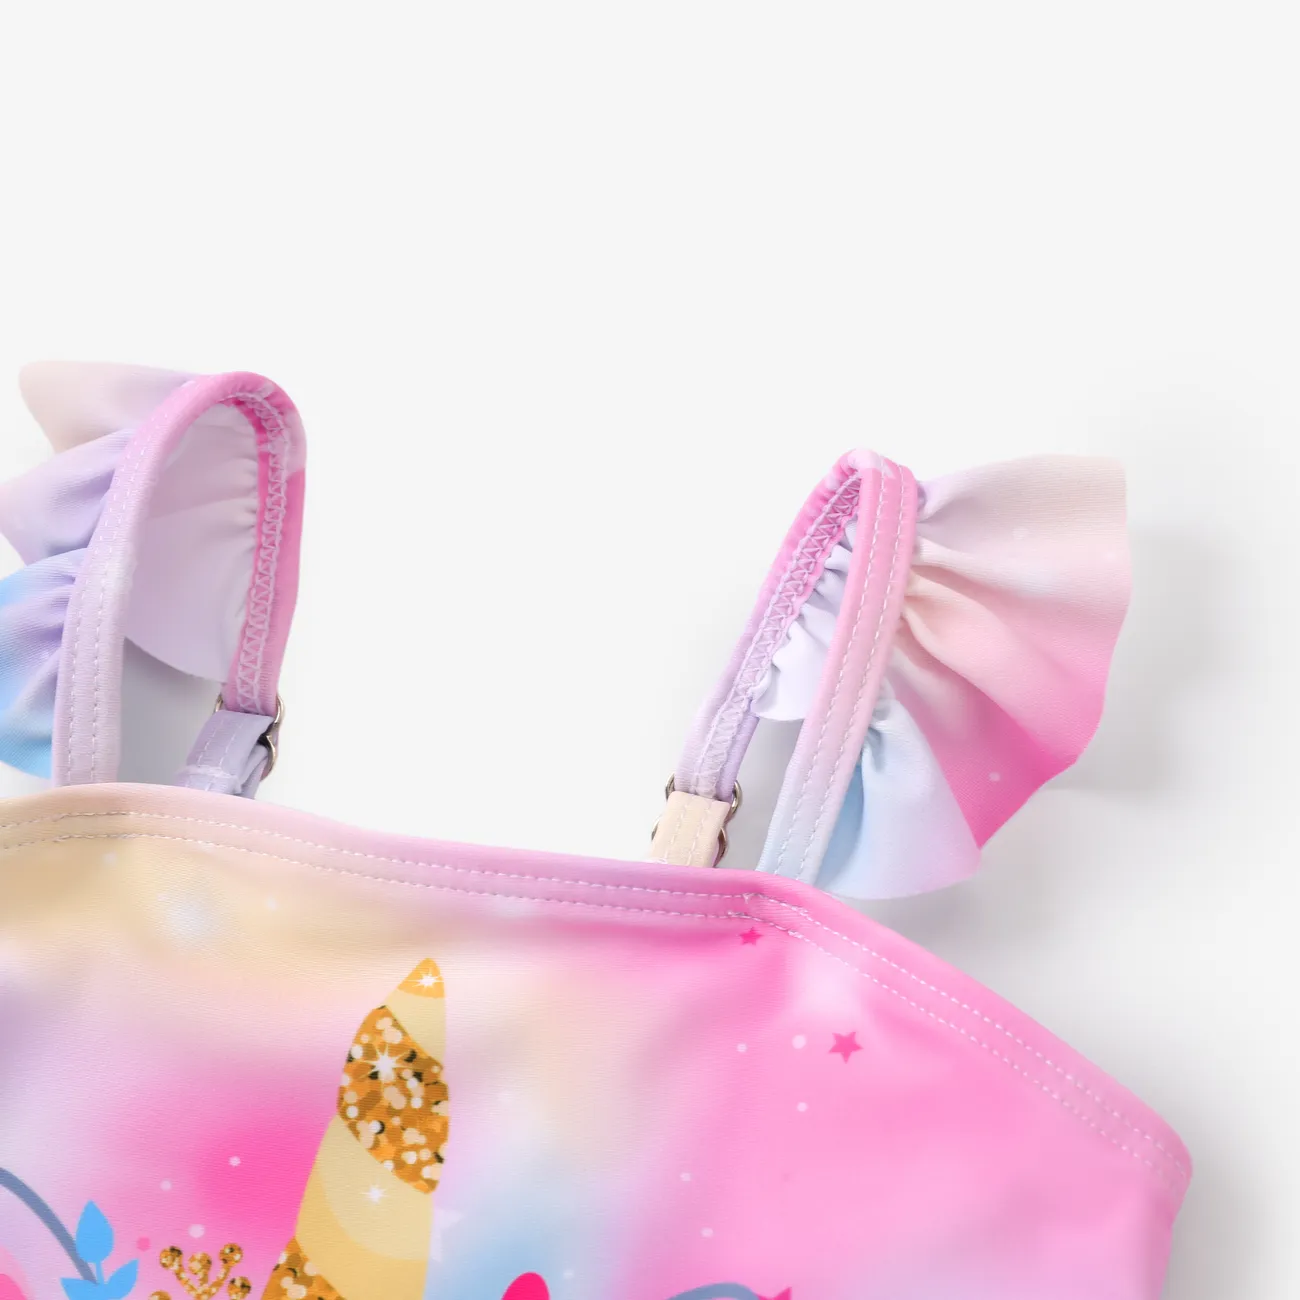 Toddler Girl Unicorn Print Flutter Sleeve One-Piece Swimsuit Multi-color big image 1